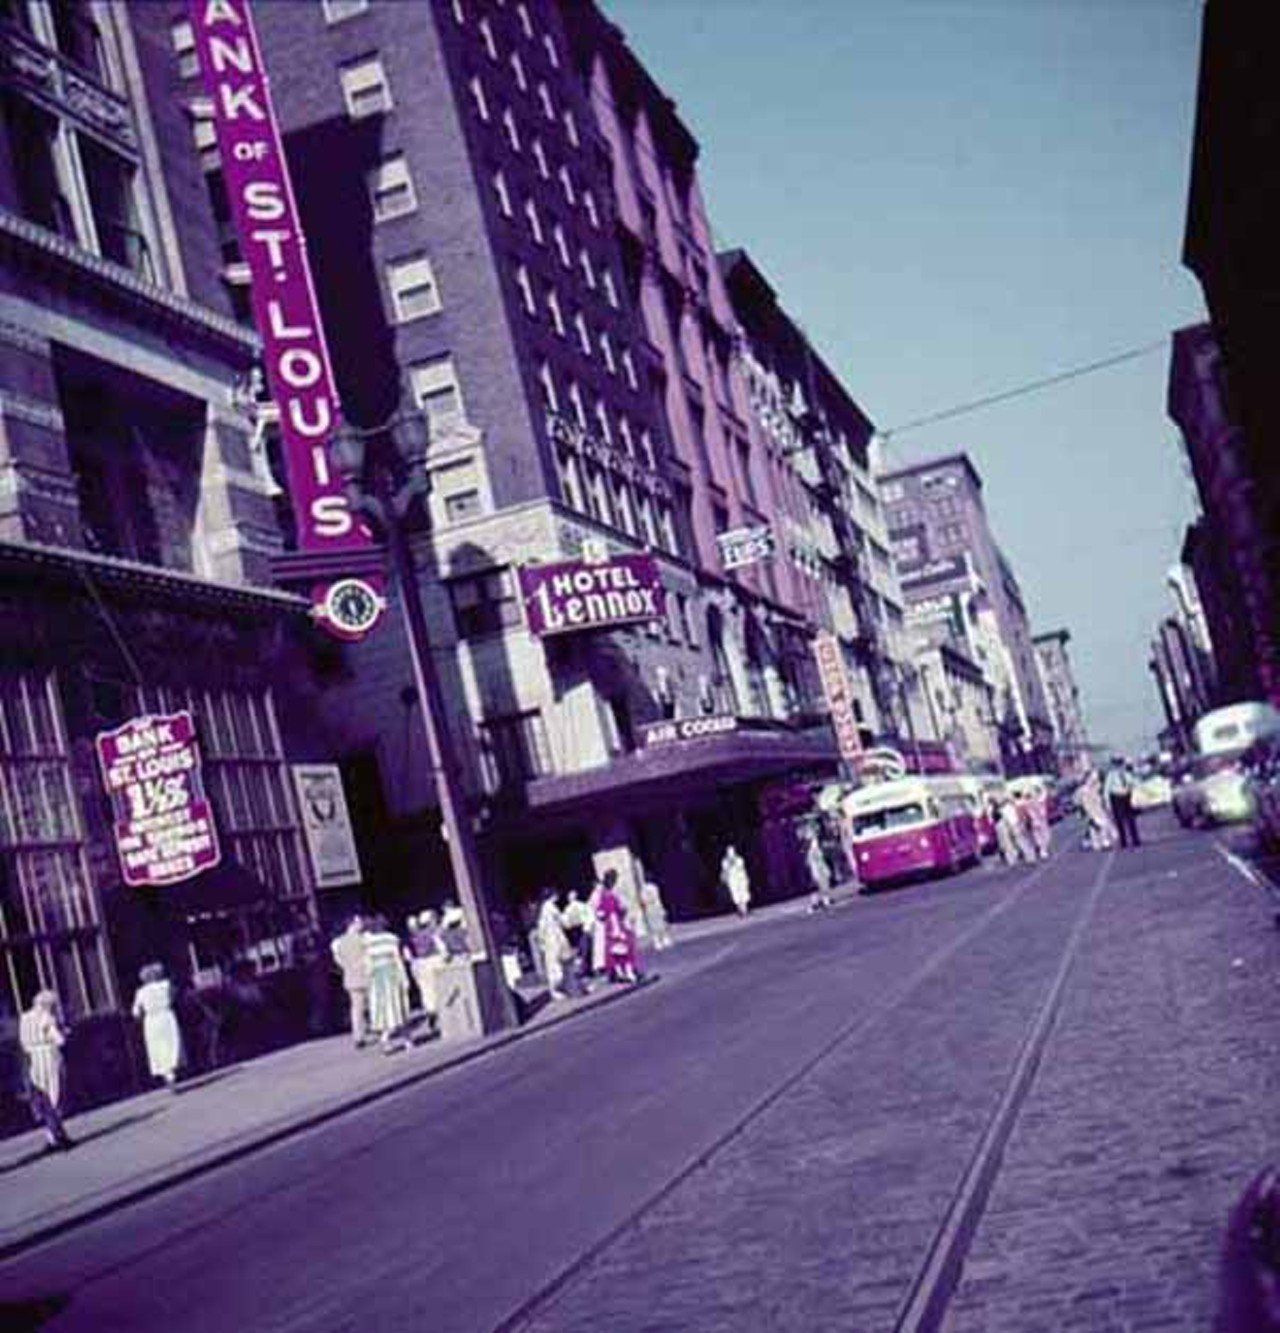 Take a streetcar down Washington Avenue (circa 1951).